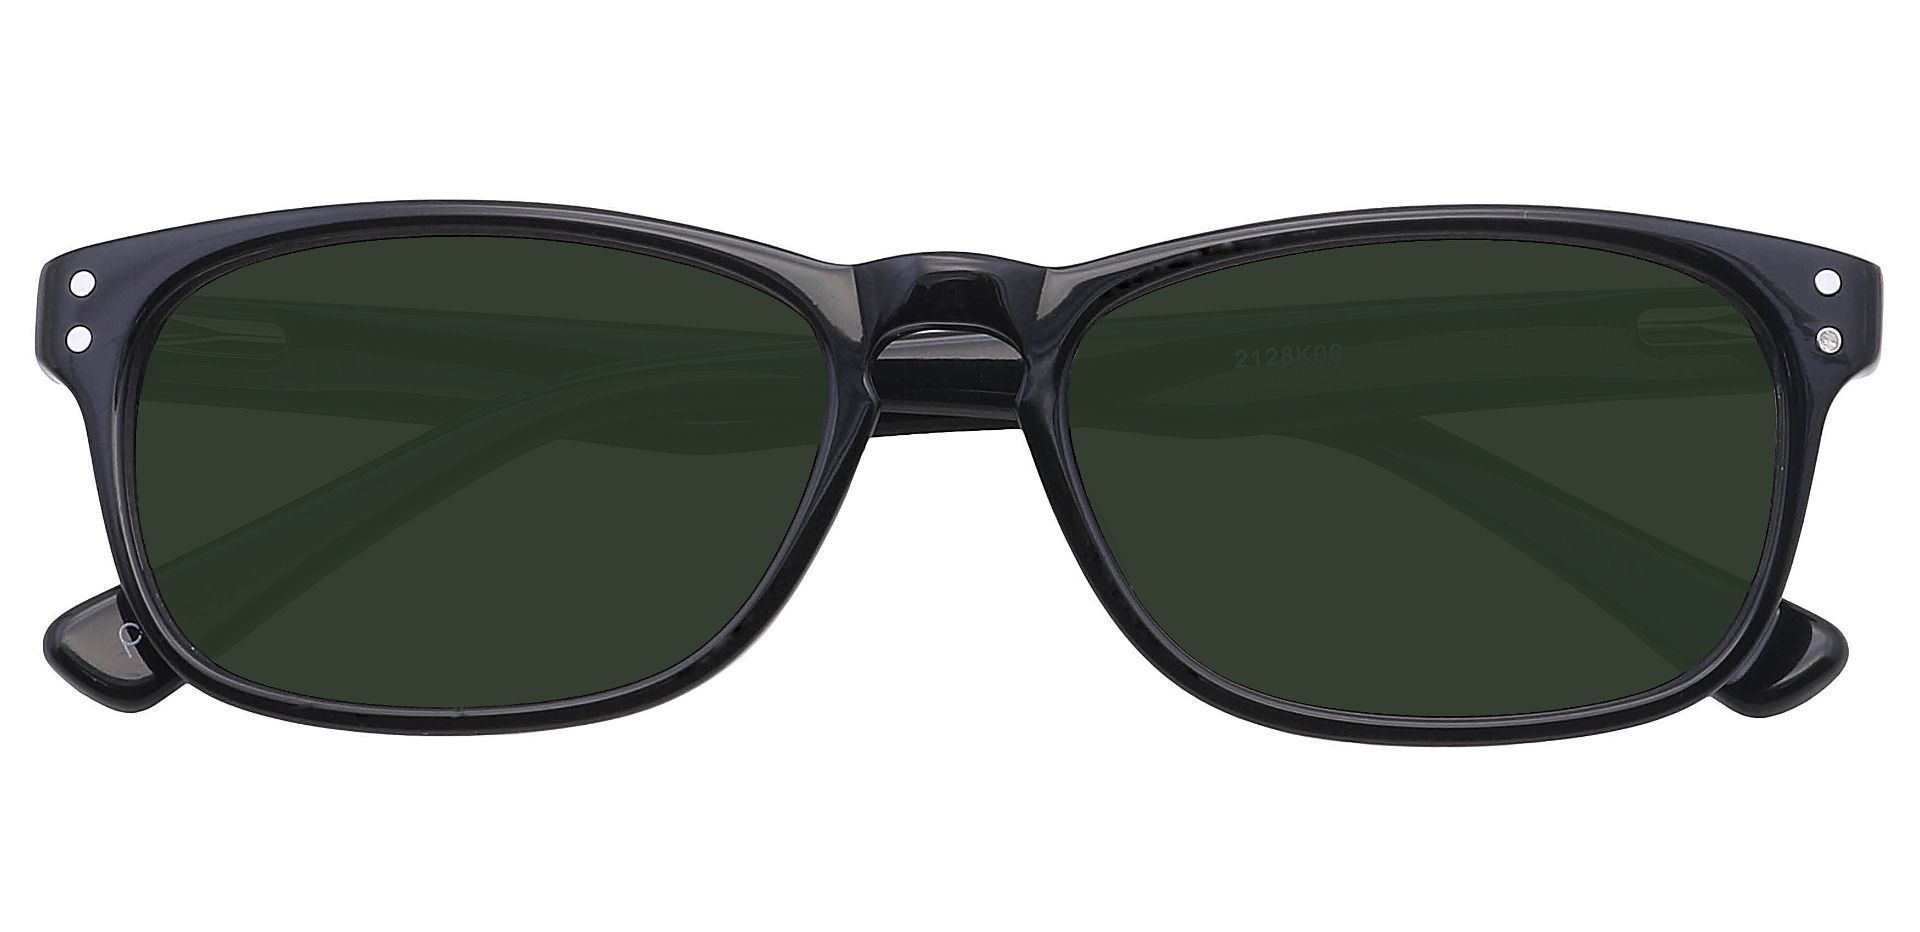 Morris Rectangle Lined Bifocal Sunglasses - Black Frame With Green Lenses